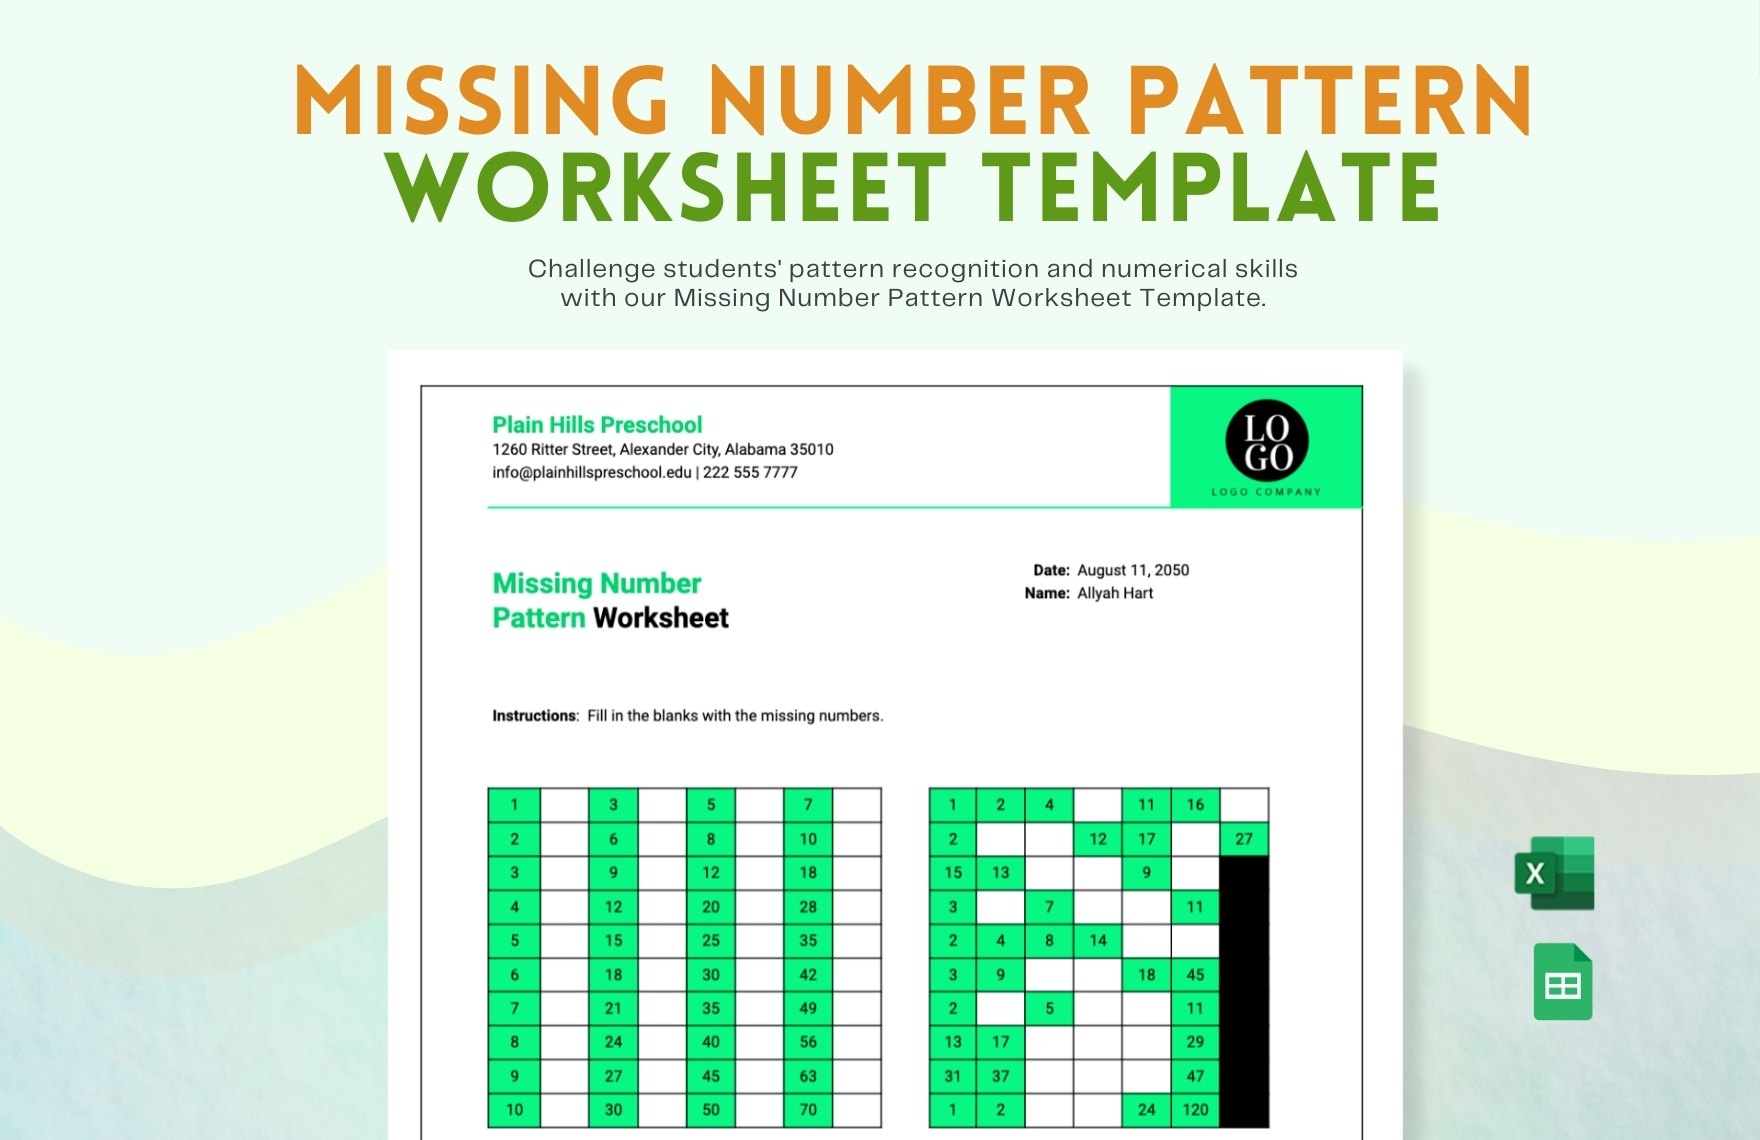 Missing Number Pattern Worksheet Template in Excel, Google Sheets